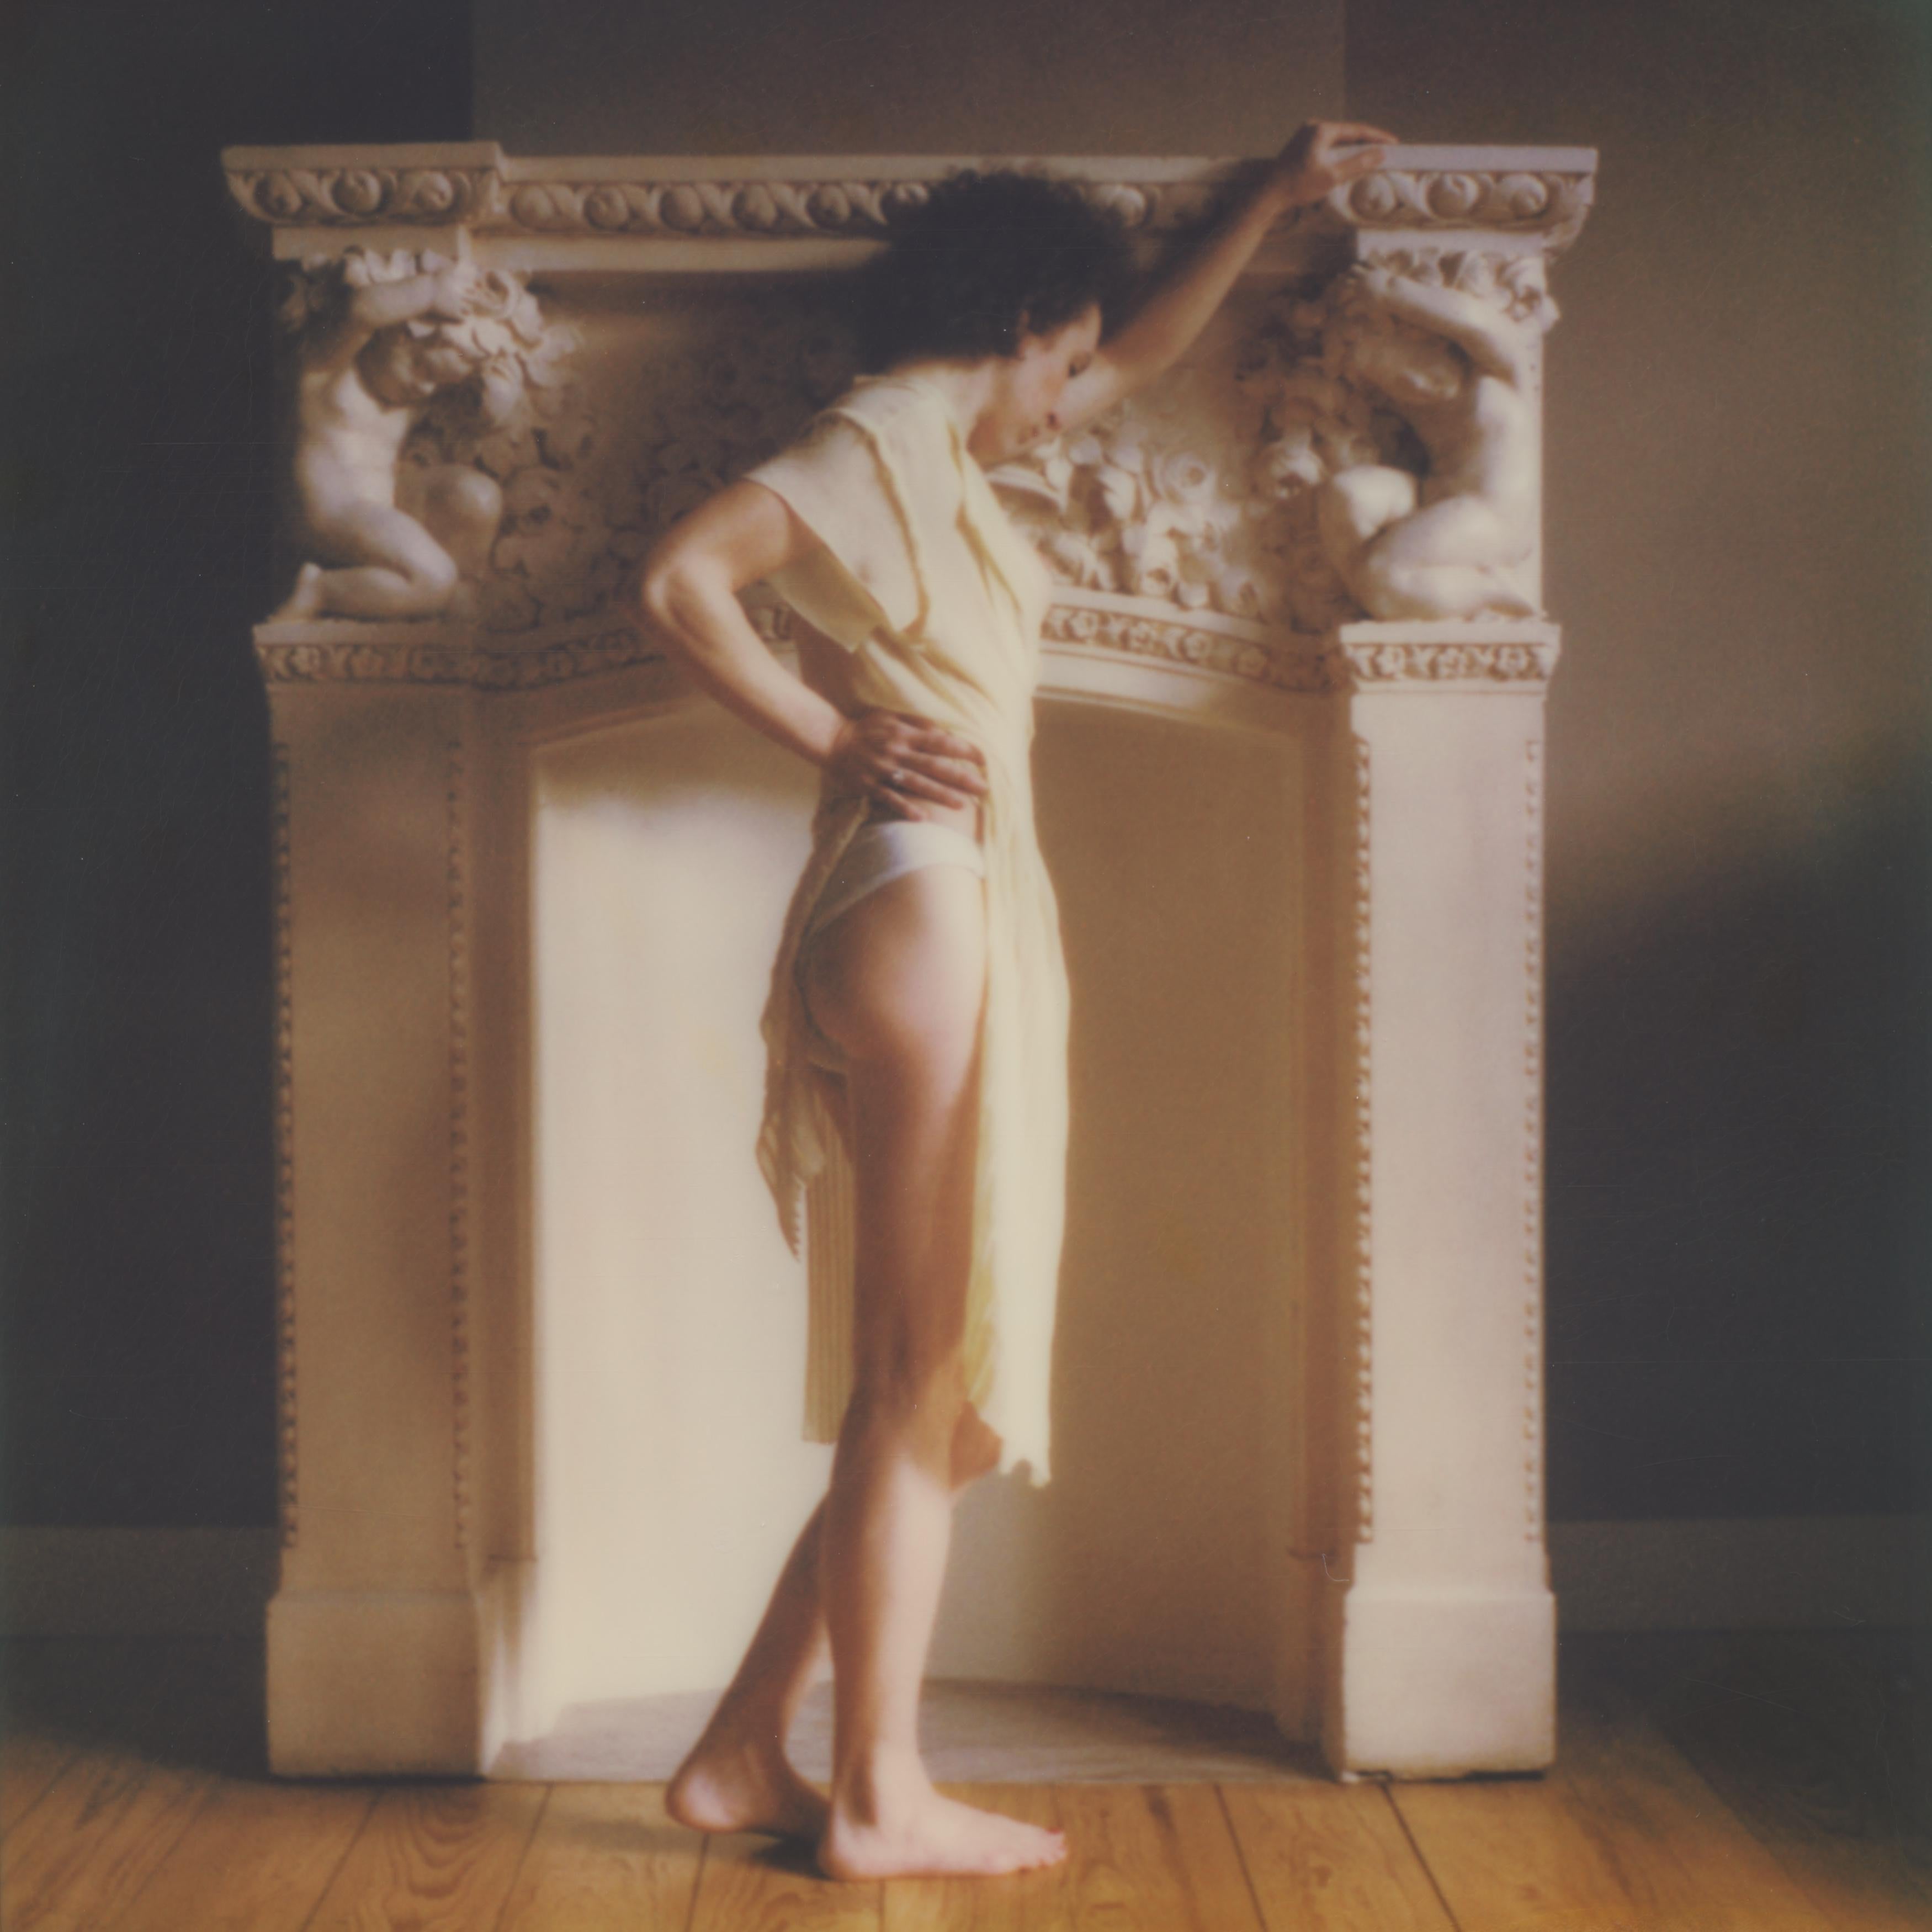 Nude Photograph Kirsten Thys van den Audenaerde - High Hopes - Polaroïd, contemporain, couleur, 21e siècle